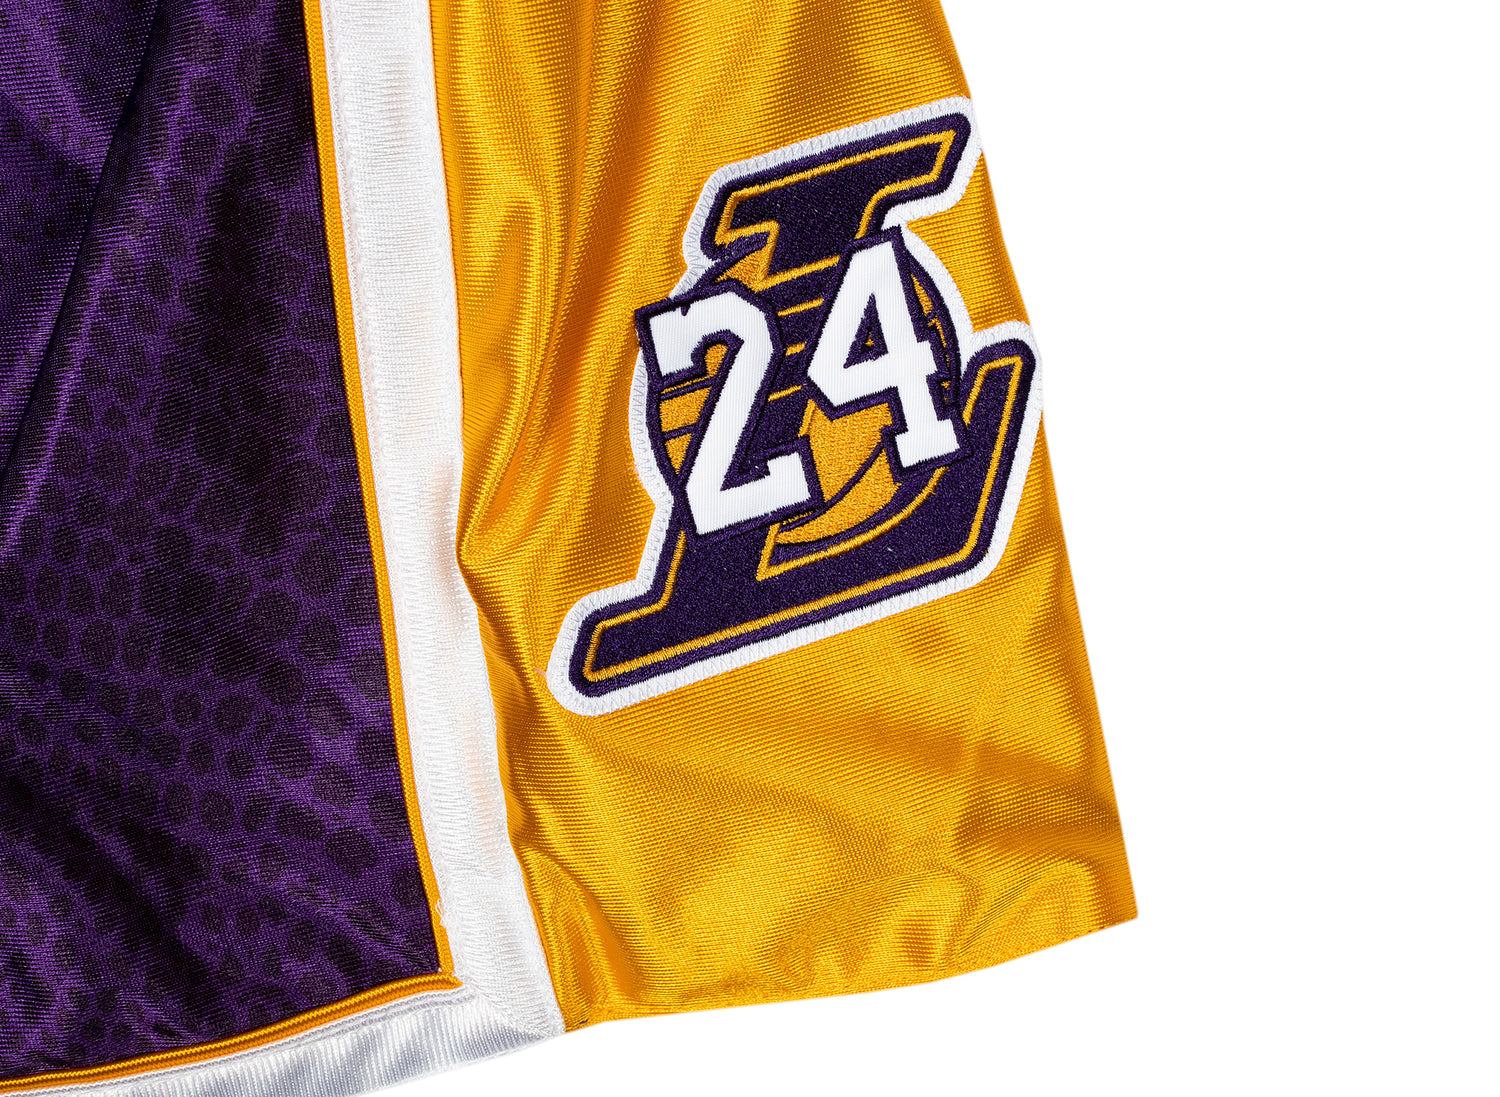 Shop Mitchell & Ness Los Angeles Lakers HOF Kobe Bryant Reversible